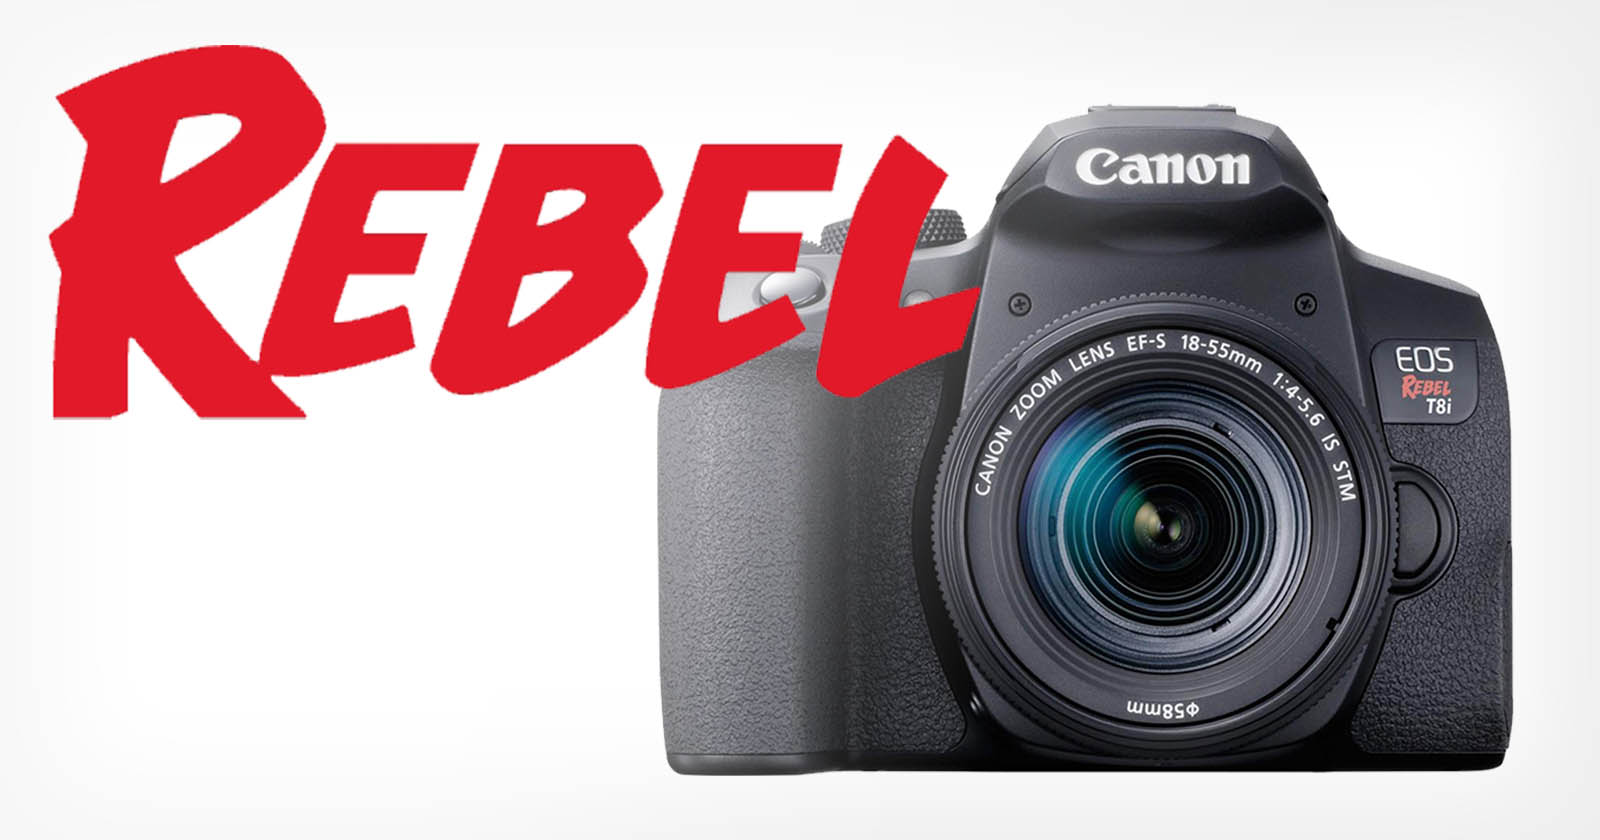 Vågn op kompleksitet hellige Canon Rebel: A Guide to the Popular Beginner Camera Line | PetaPixel